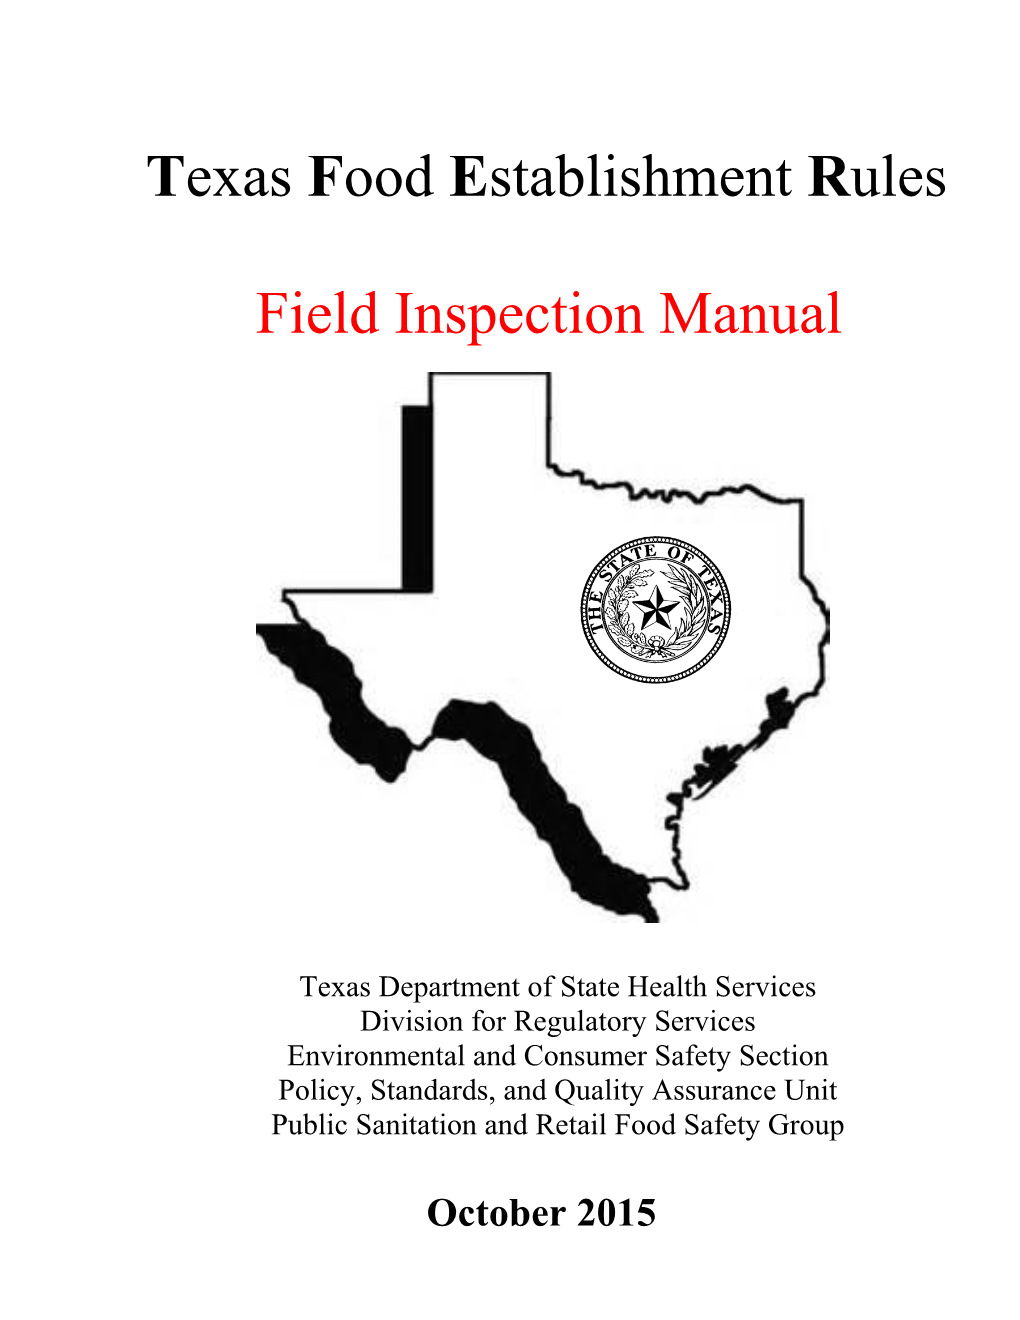 Texas Food Establishment Rules Field Inspection Manual